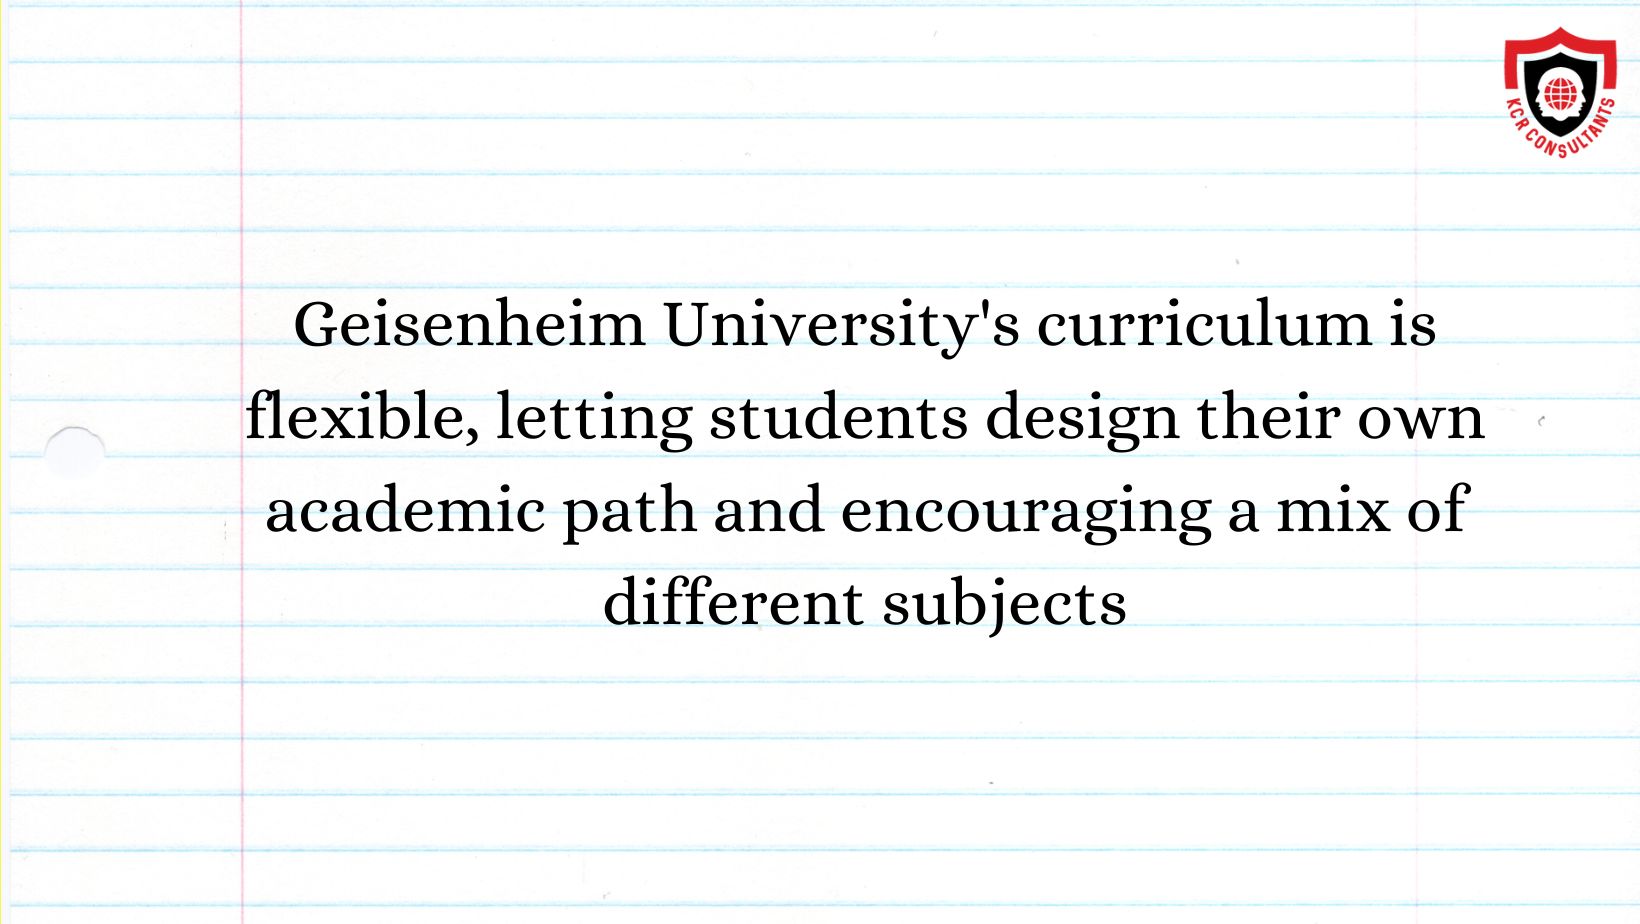 HOCHSCHULE GEISENHEIM UNIVERSITY - KCR CONSULTANTS - curriculum for students